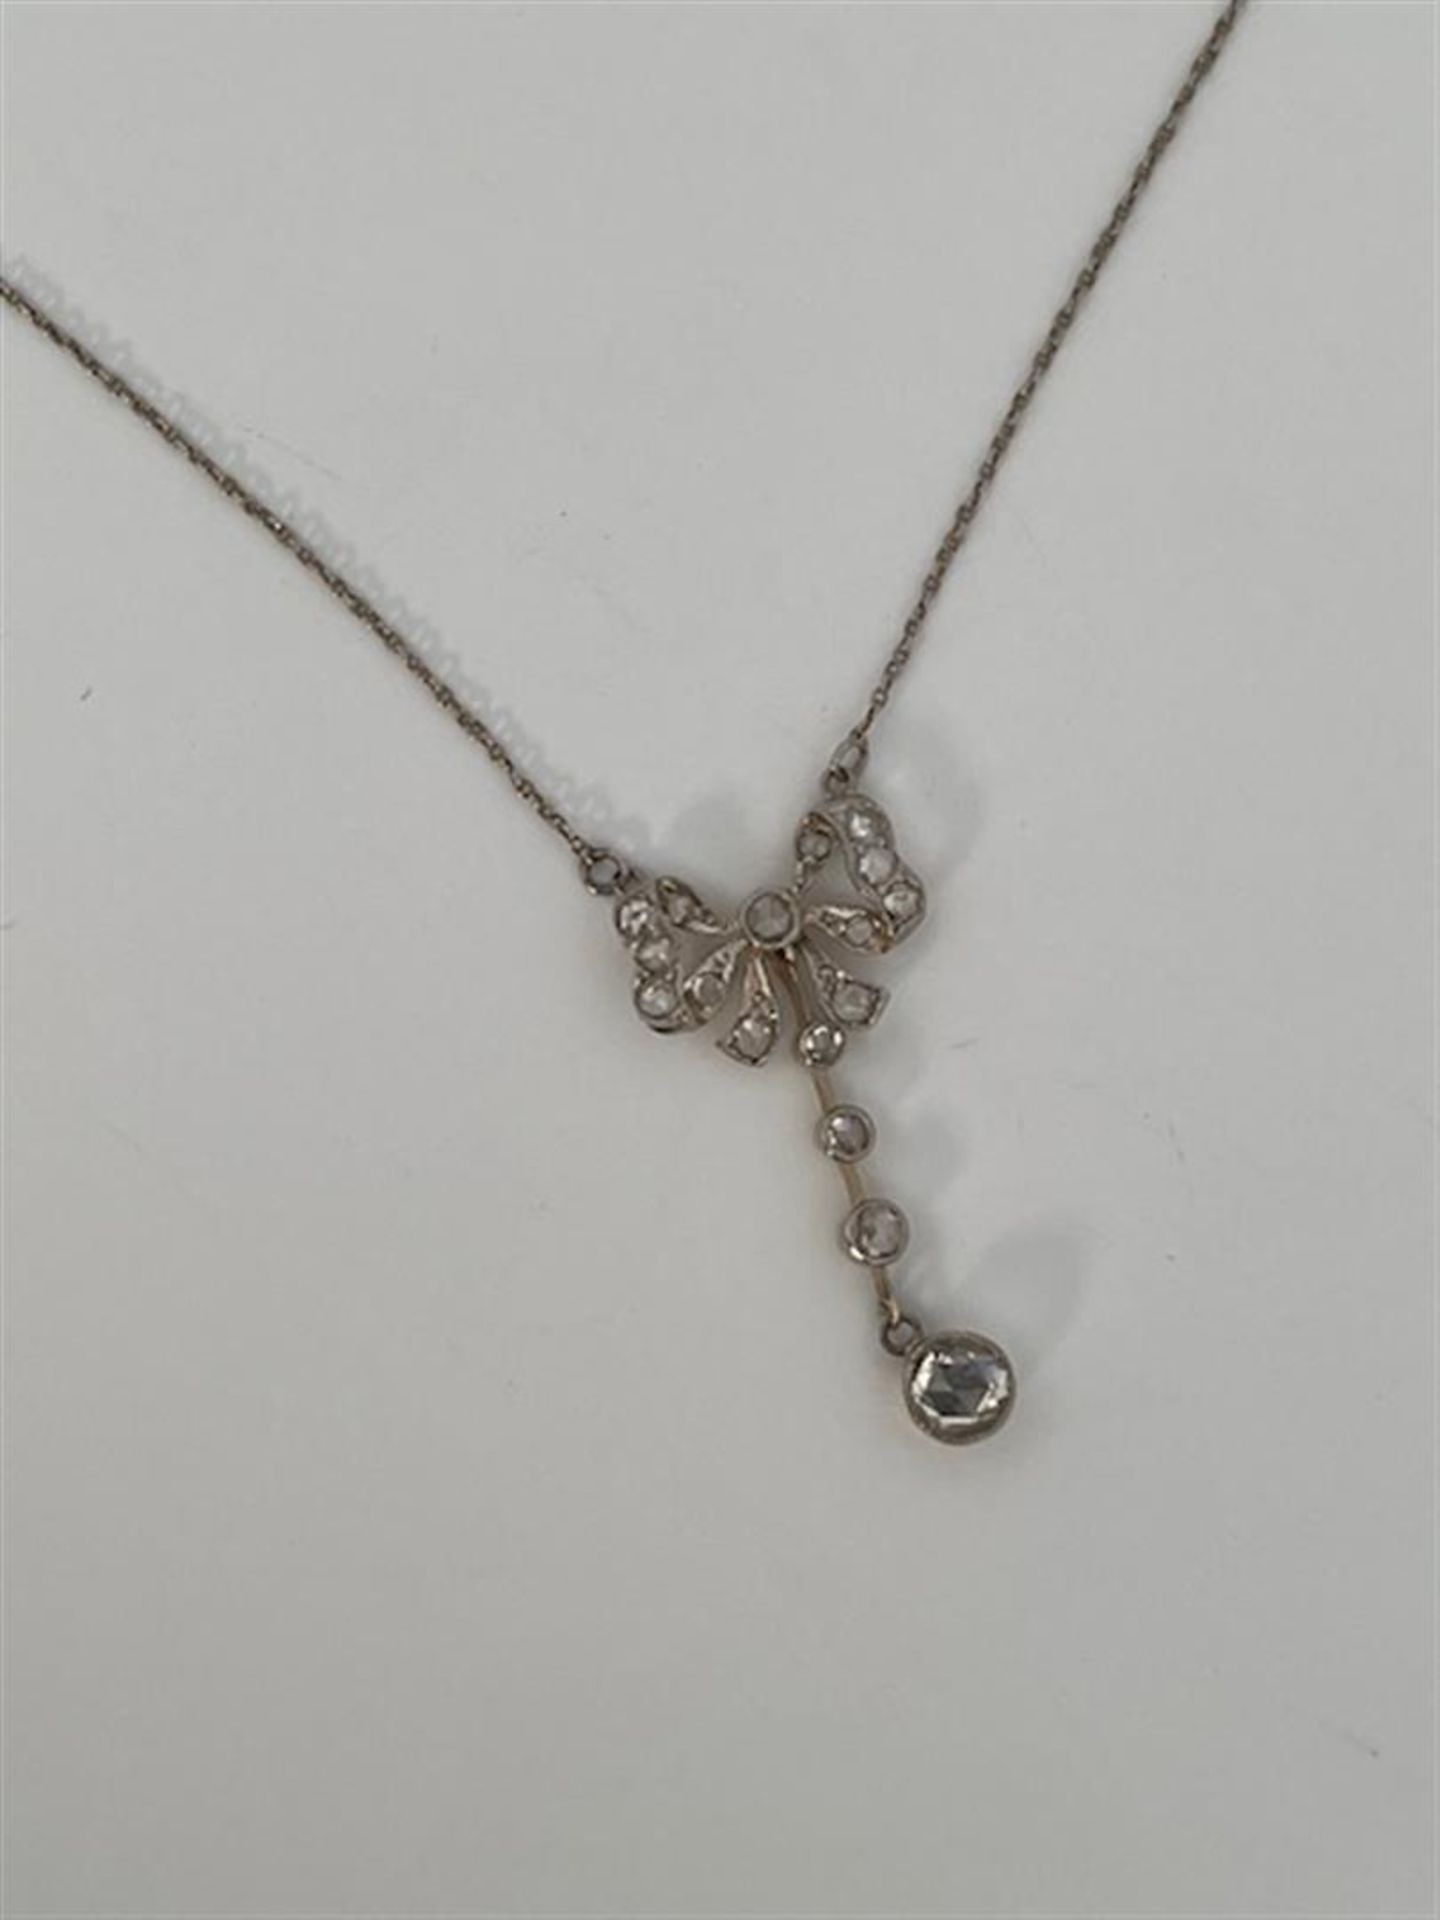 9kt bicolor gold 'Romantic vintage' necklace set with diamonds.
The pendant on the necklace is set w